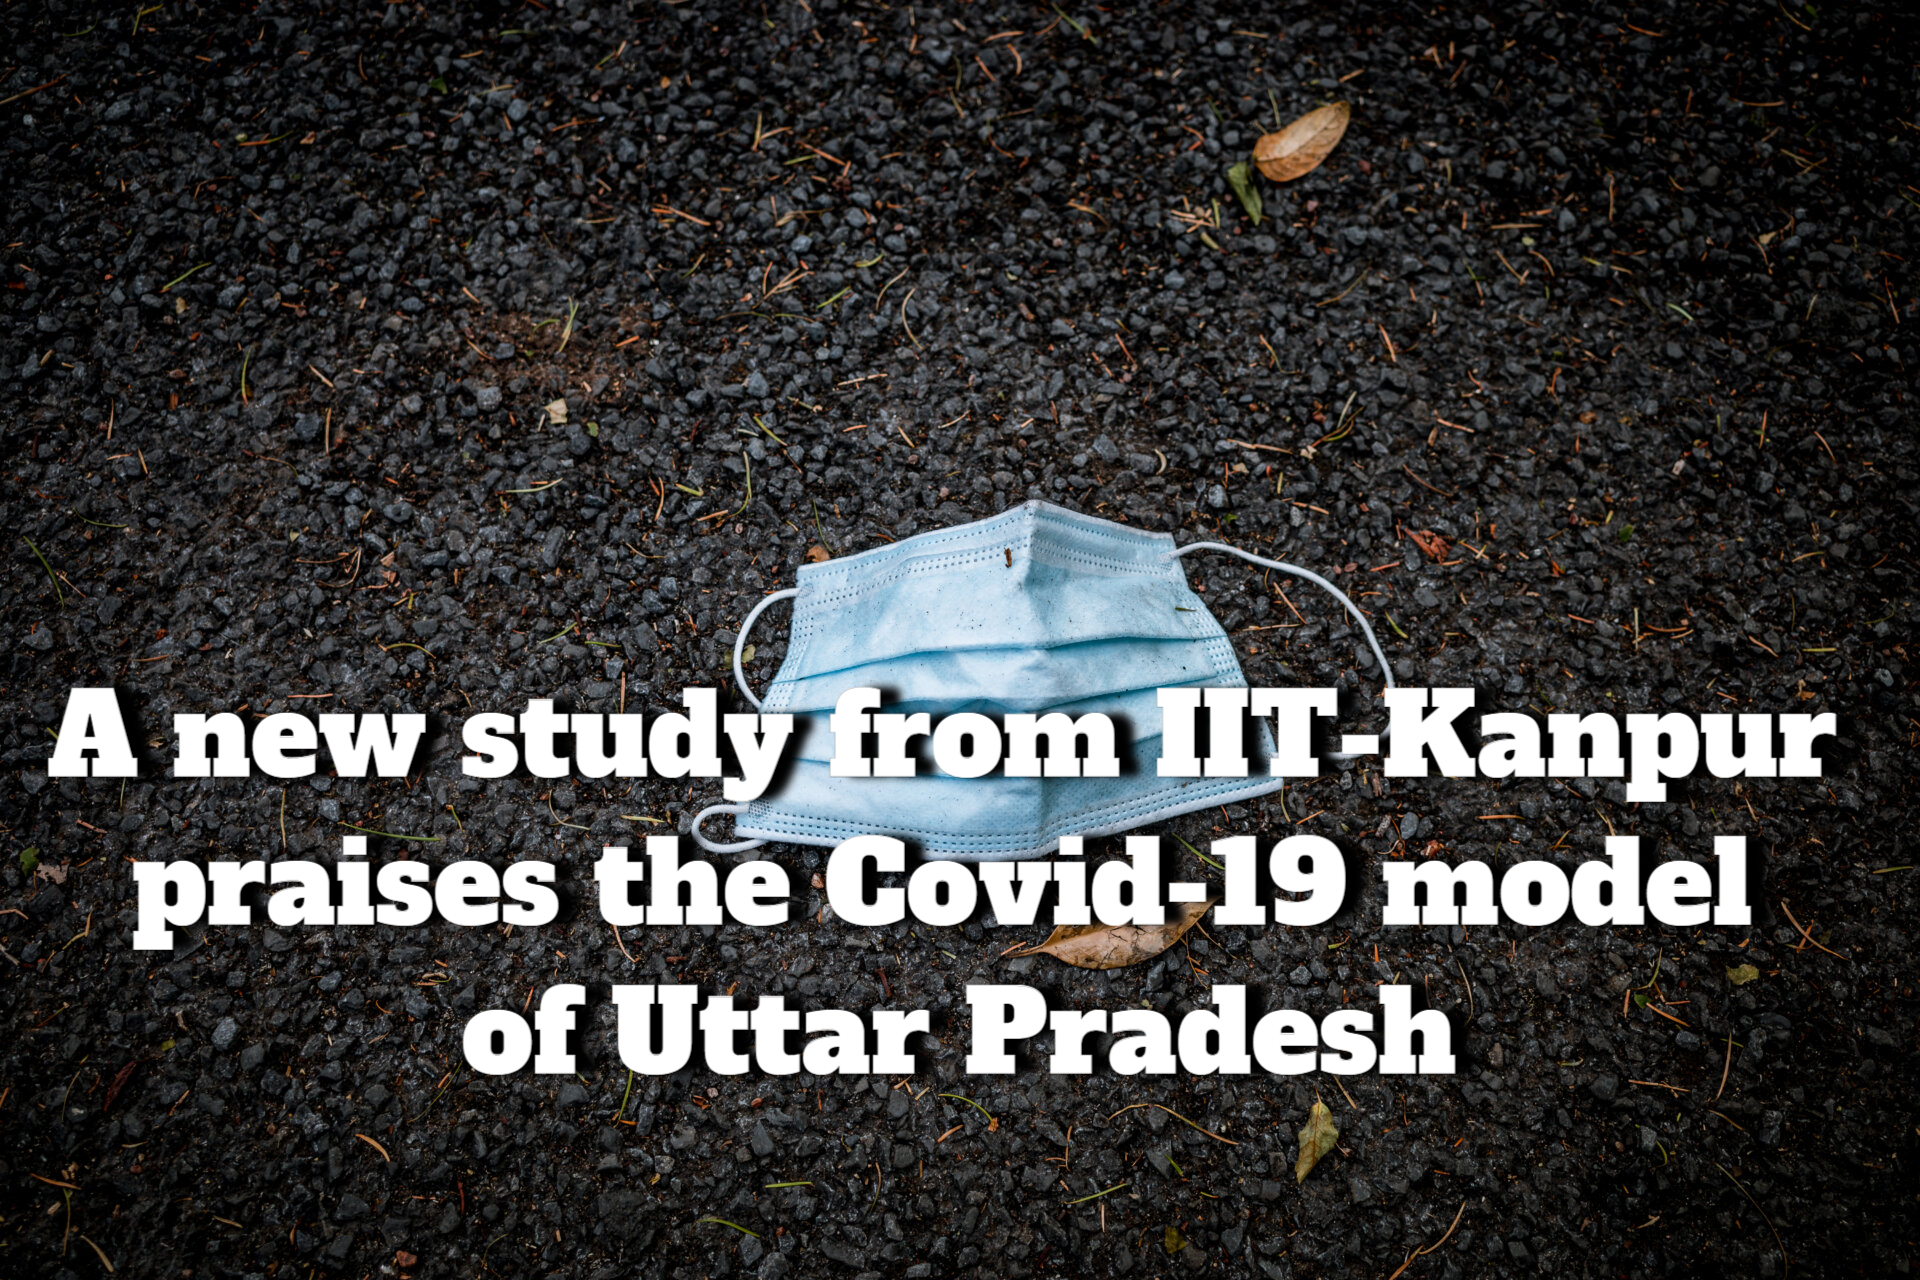 IIT-Kanpur’s new study praises the Covid-19 Model of Uttar Pradesh